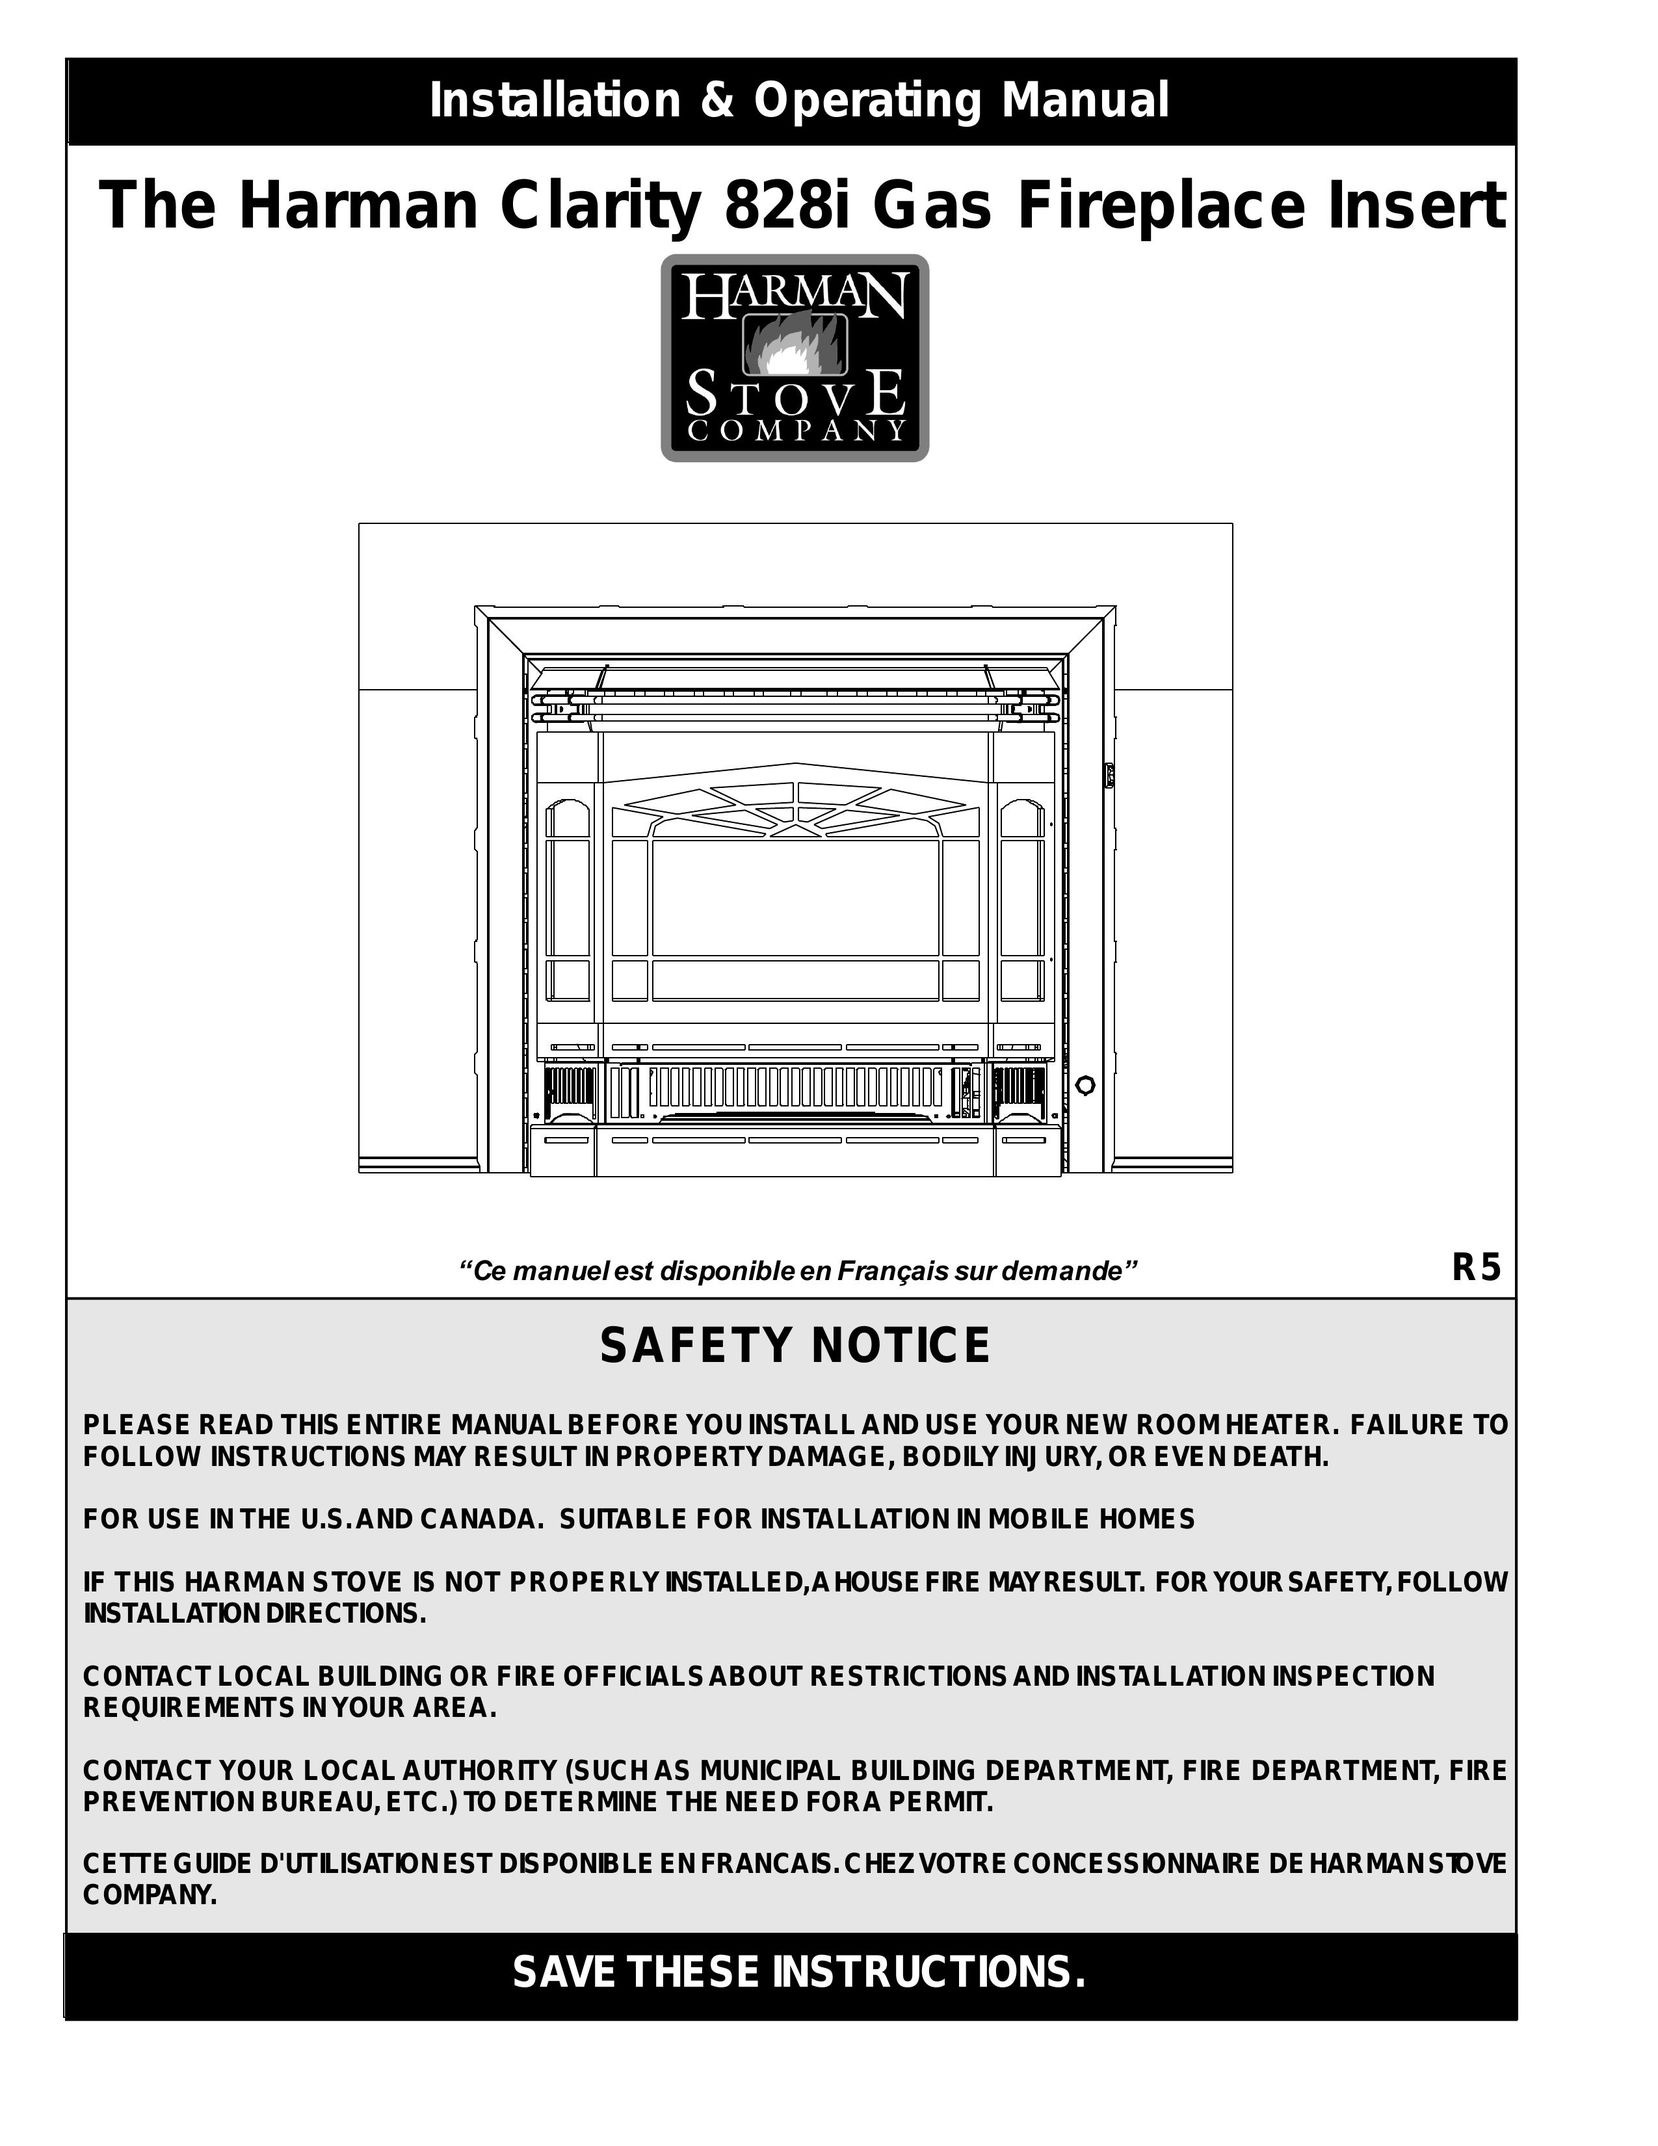 Harman Stove Company 828i Indoor Fireplace User Manual